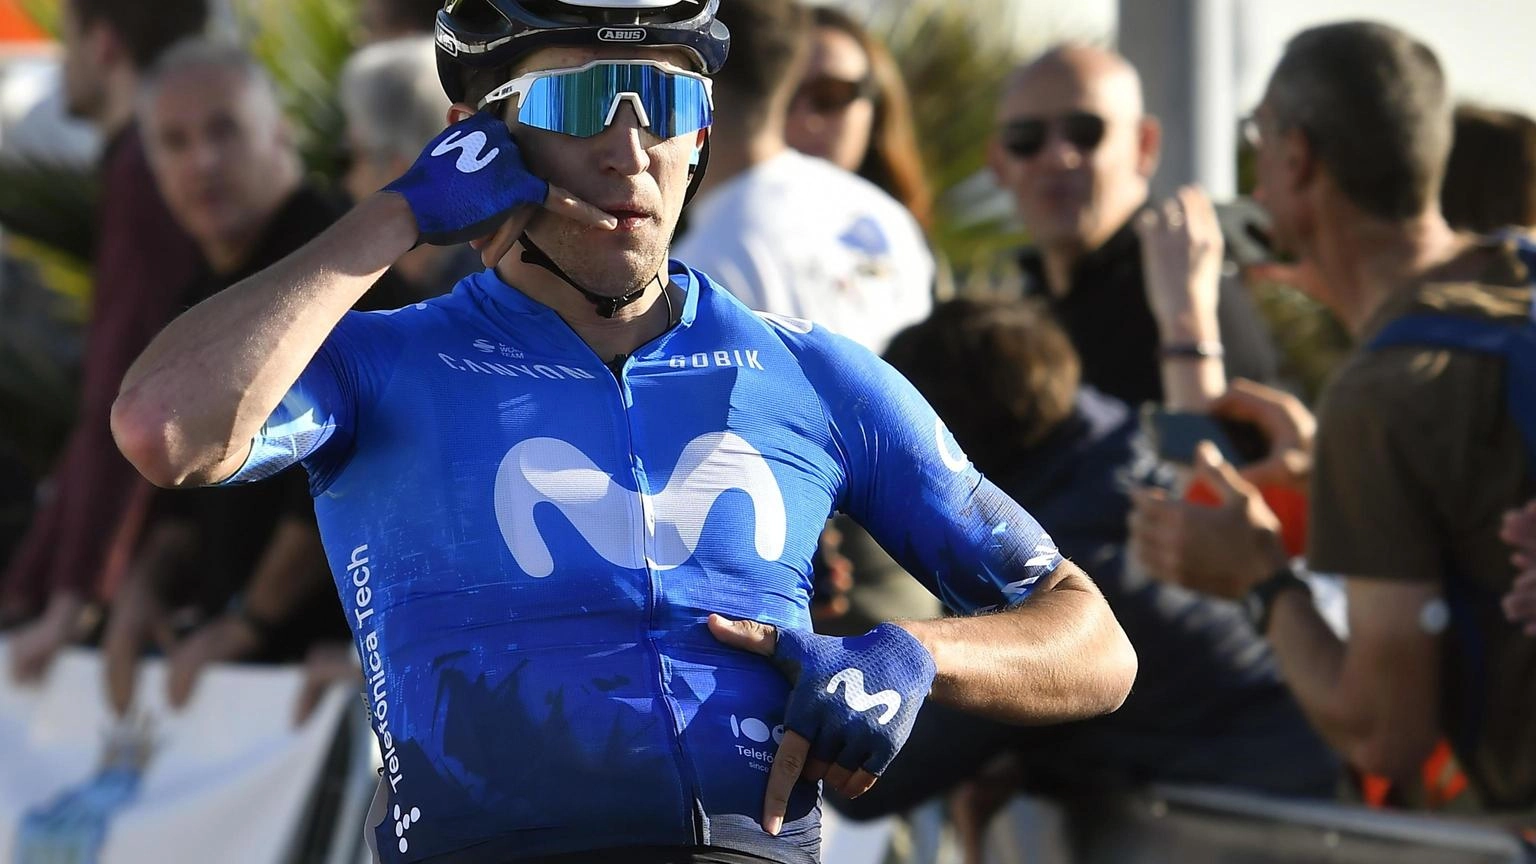 Giro: Sanchez Mayo vince la 6/a tappa, Pogacar resta leader